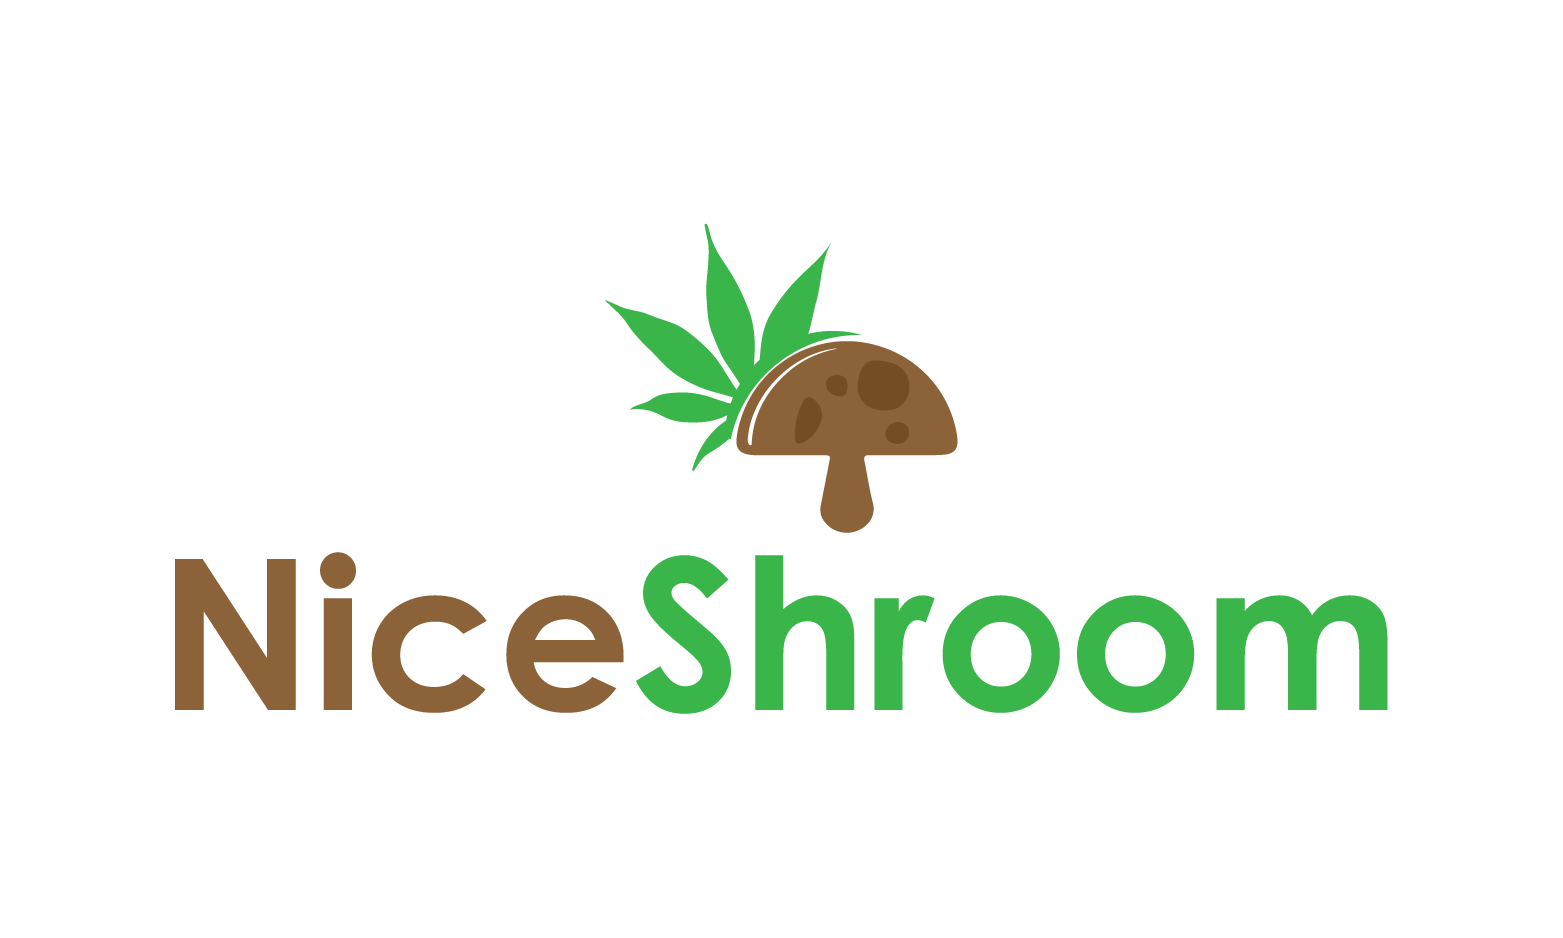 NiceShroom.com - Creative brandable domain for sale